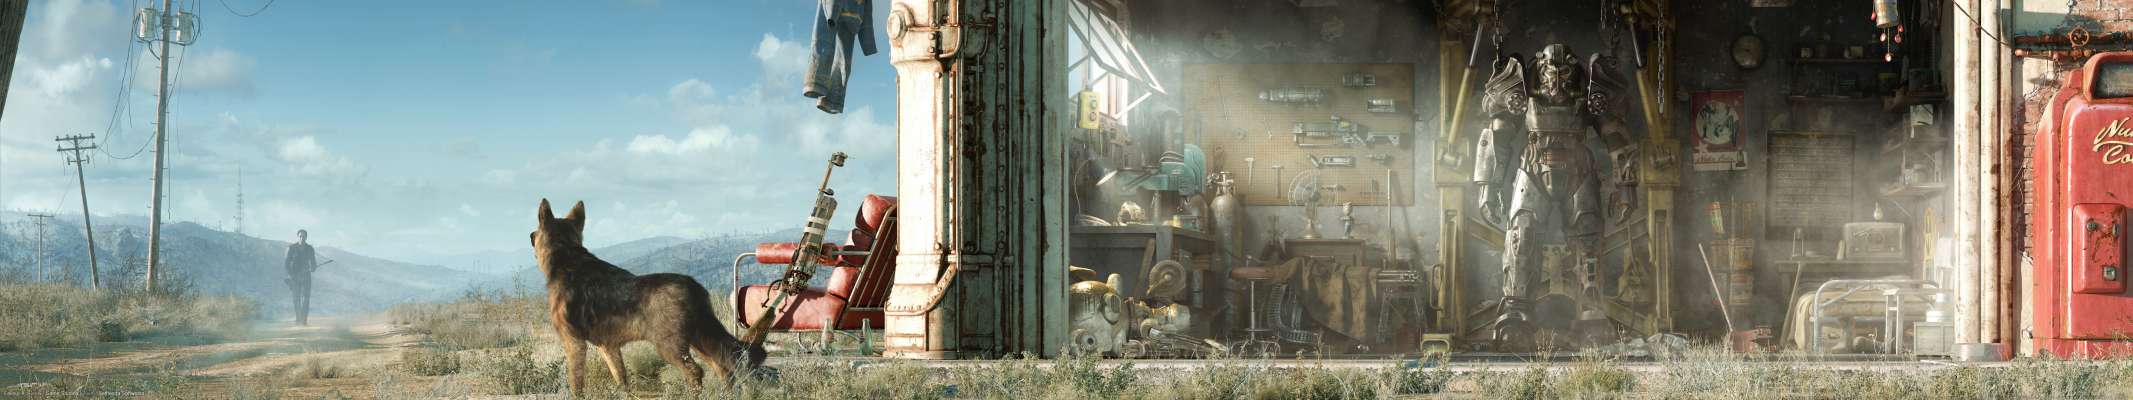 Fallout 4 triple screen fond d'cran